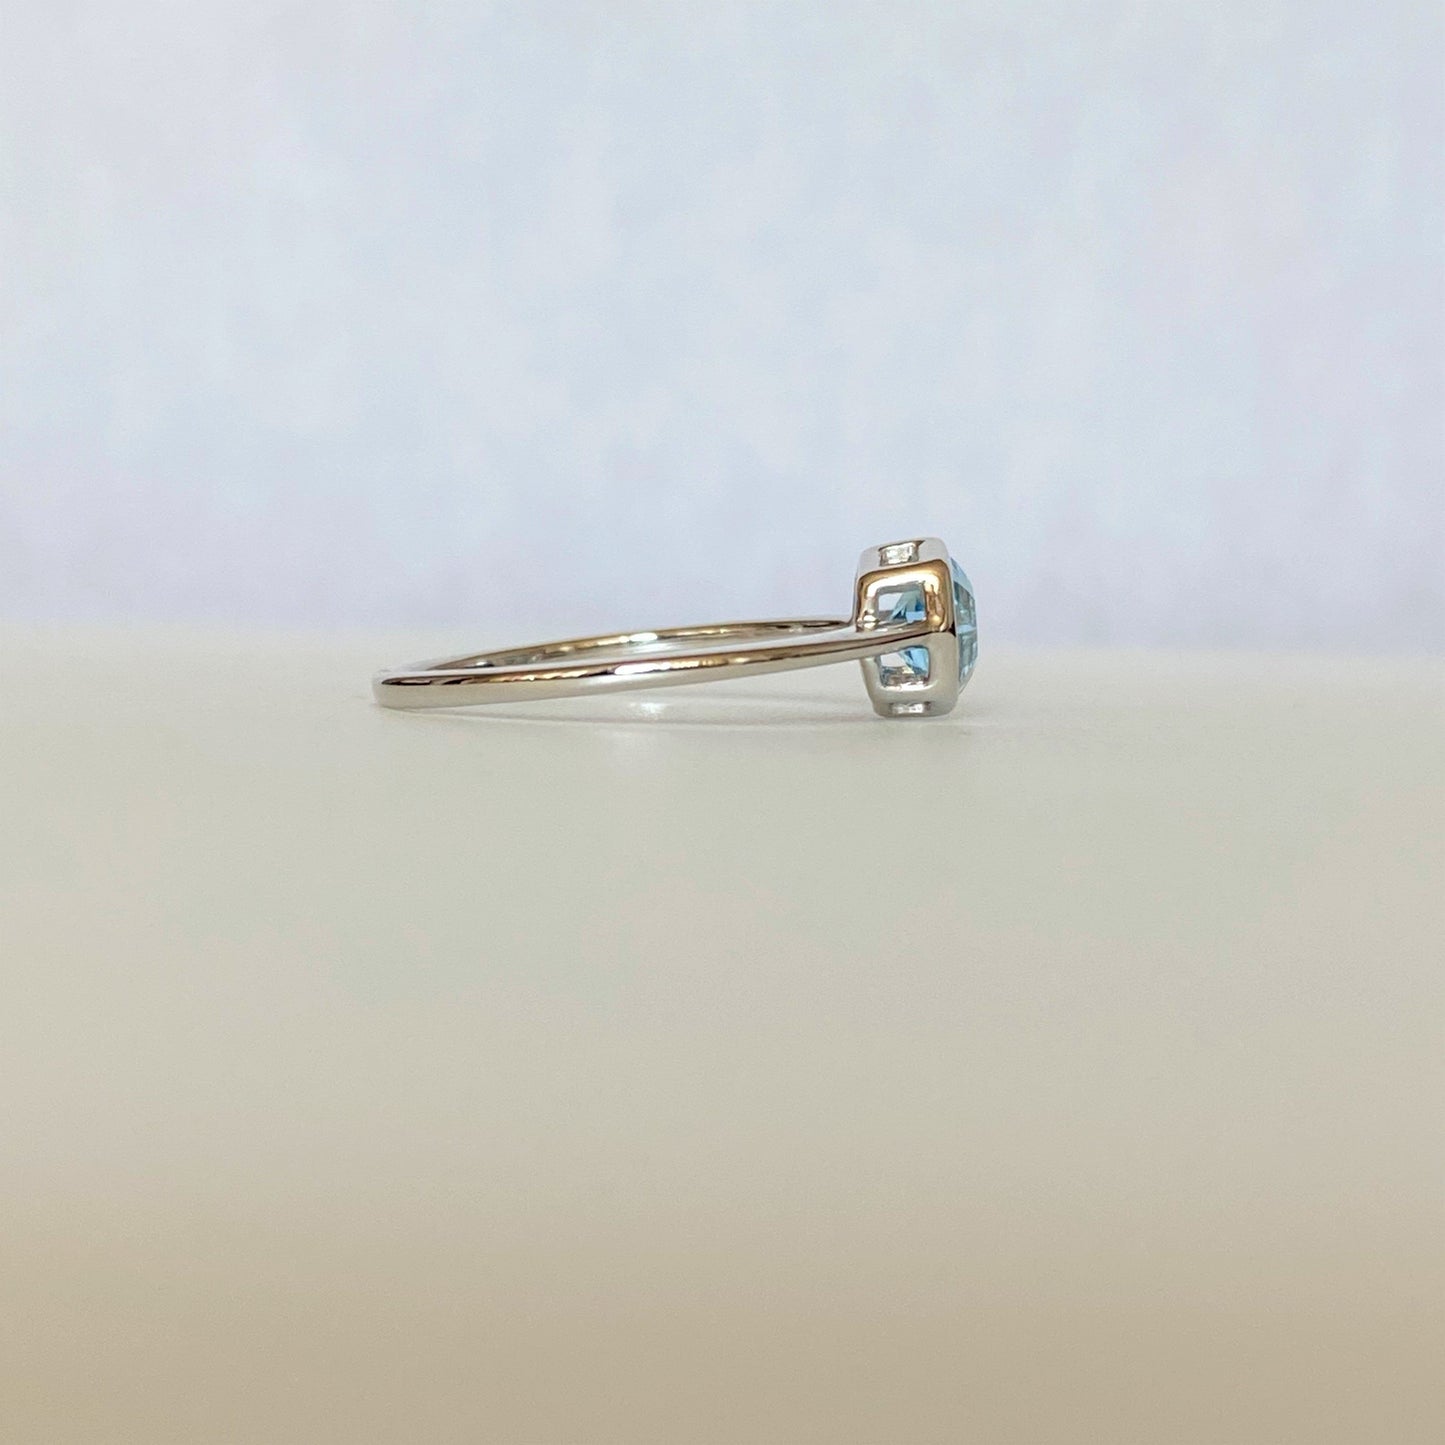 FARA Bezel Set Blue Topaz Engagement / Promise / Stackable Ring Sterling Silver